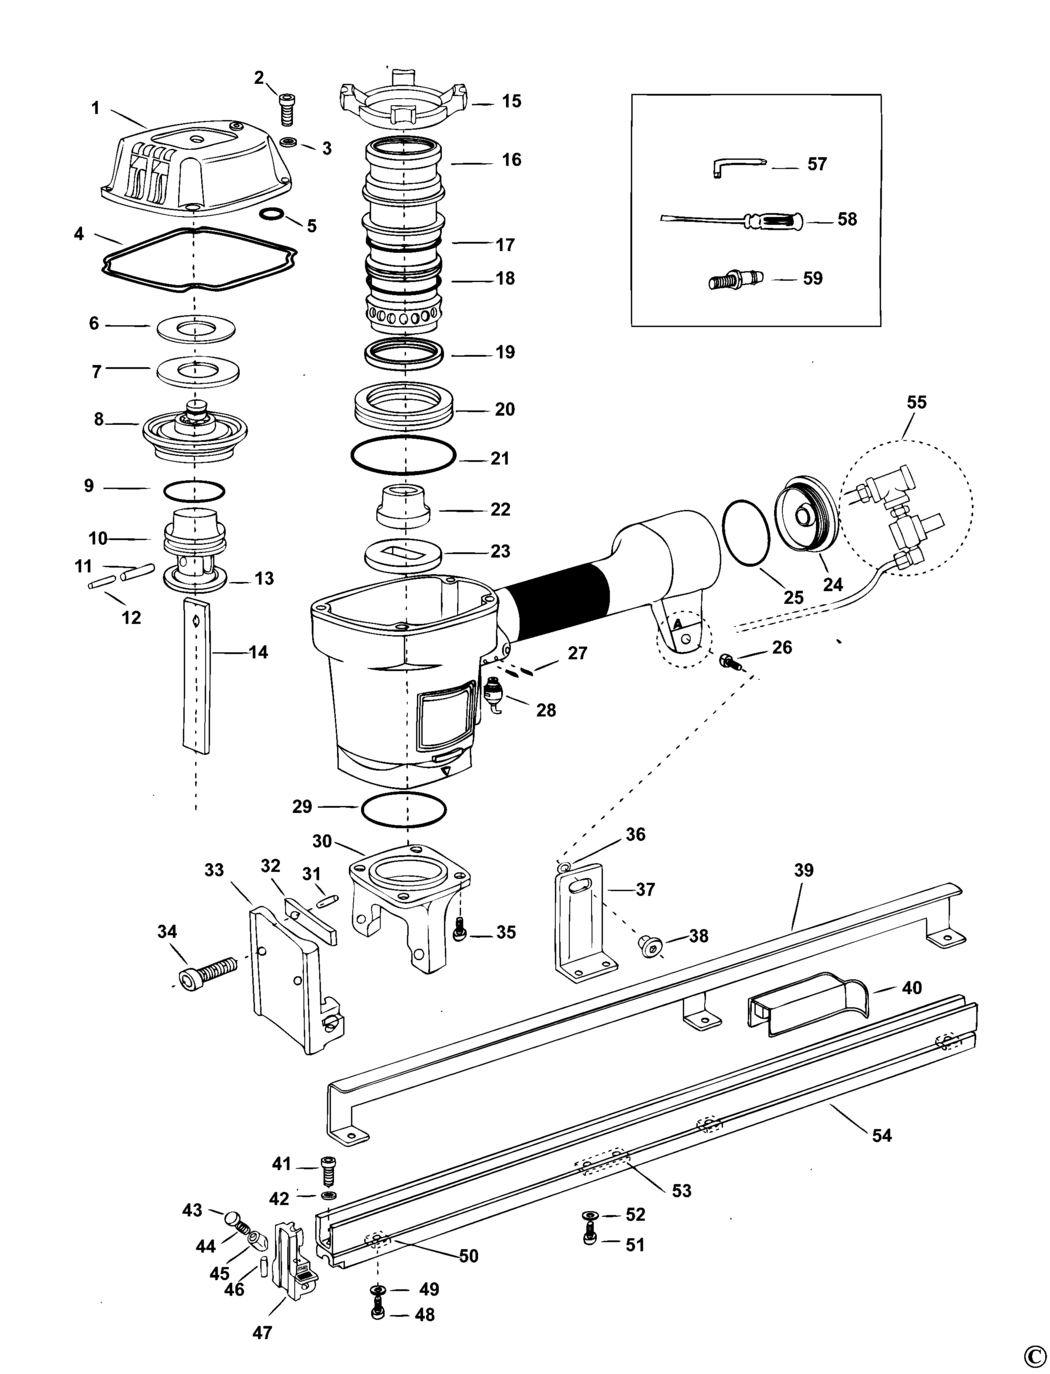 Bostitch F94E SERIES Type REV A Stapler Spare Parts